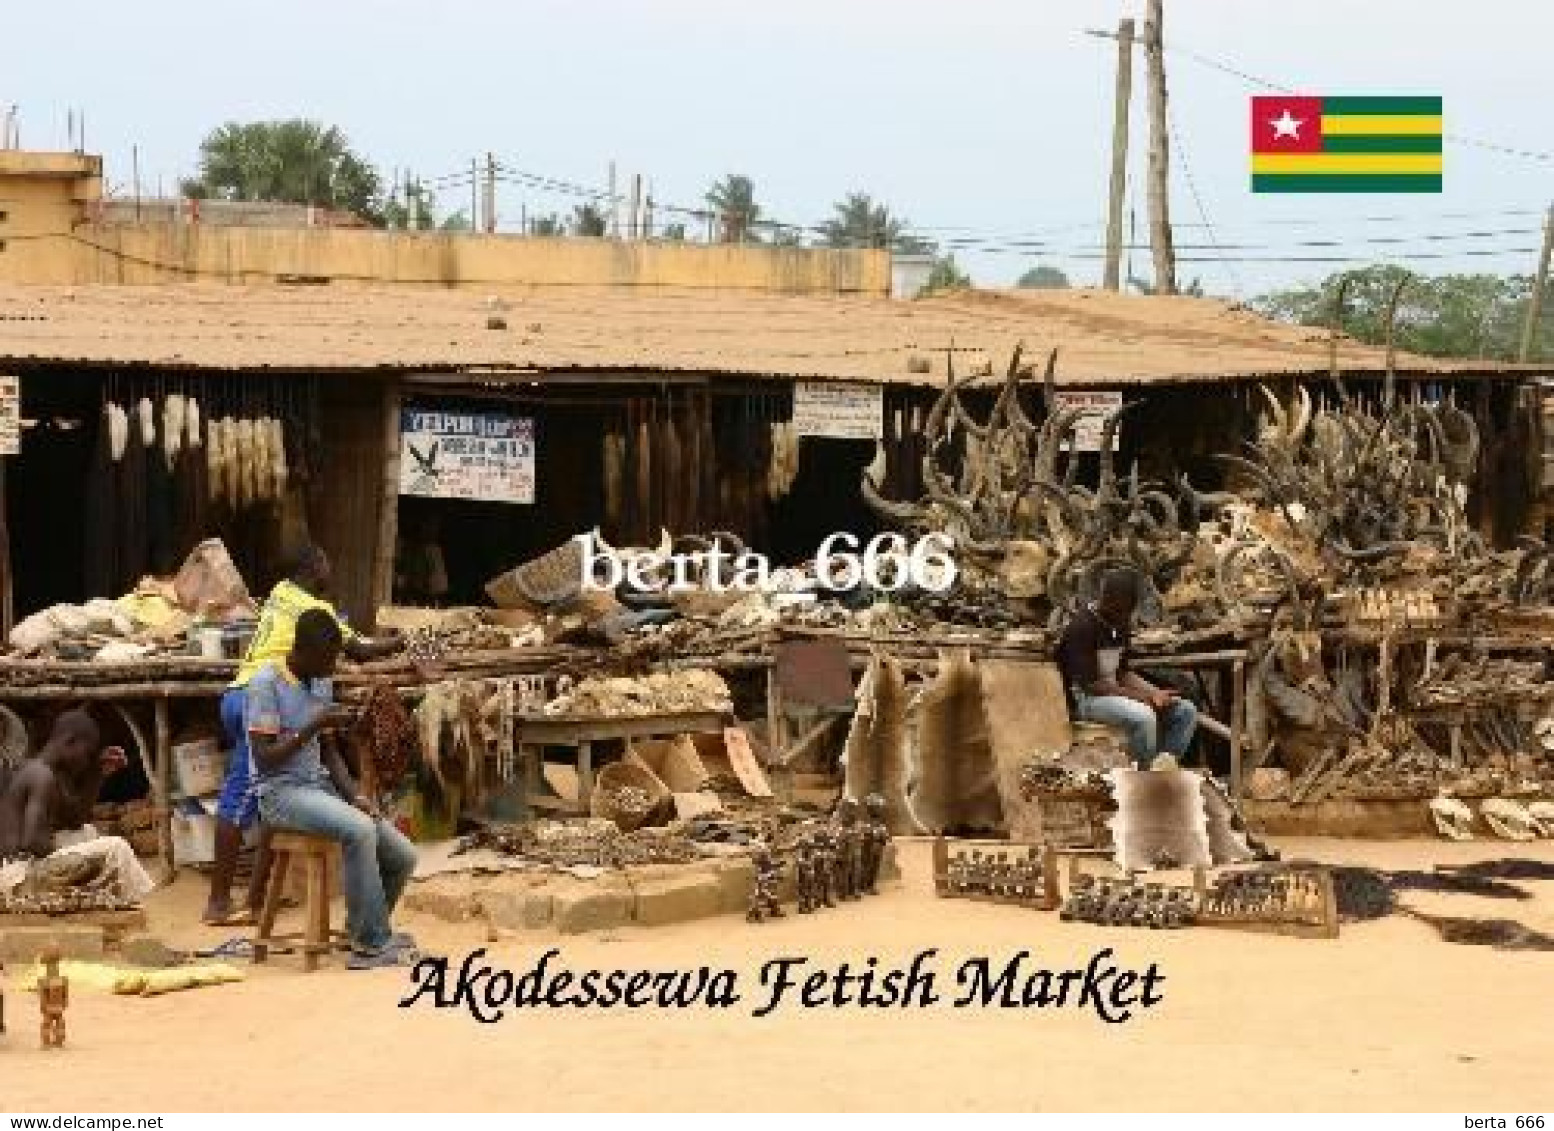 Togo Lome Akodessewa Fetish Market New Postcard - Togo